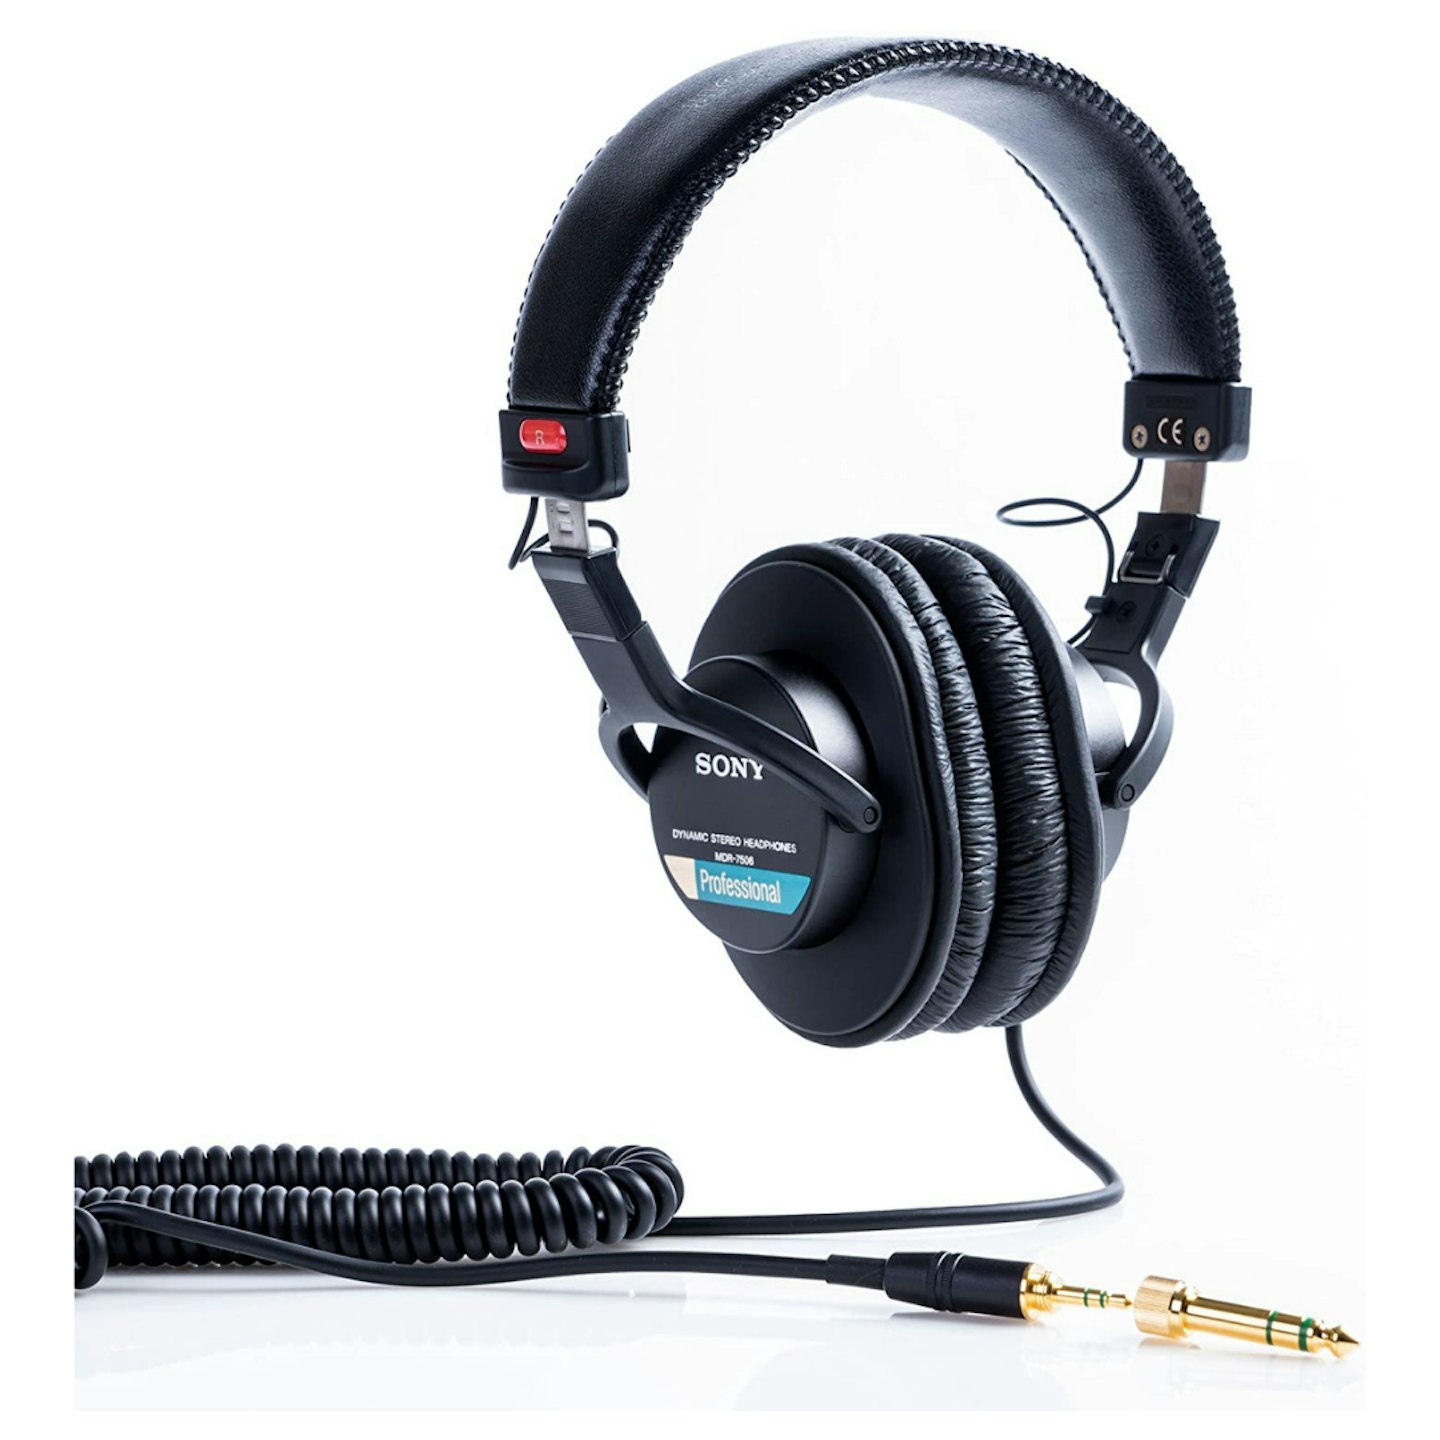 Sony MDR-7506/1 studio headphones